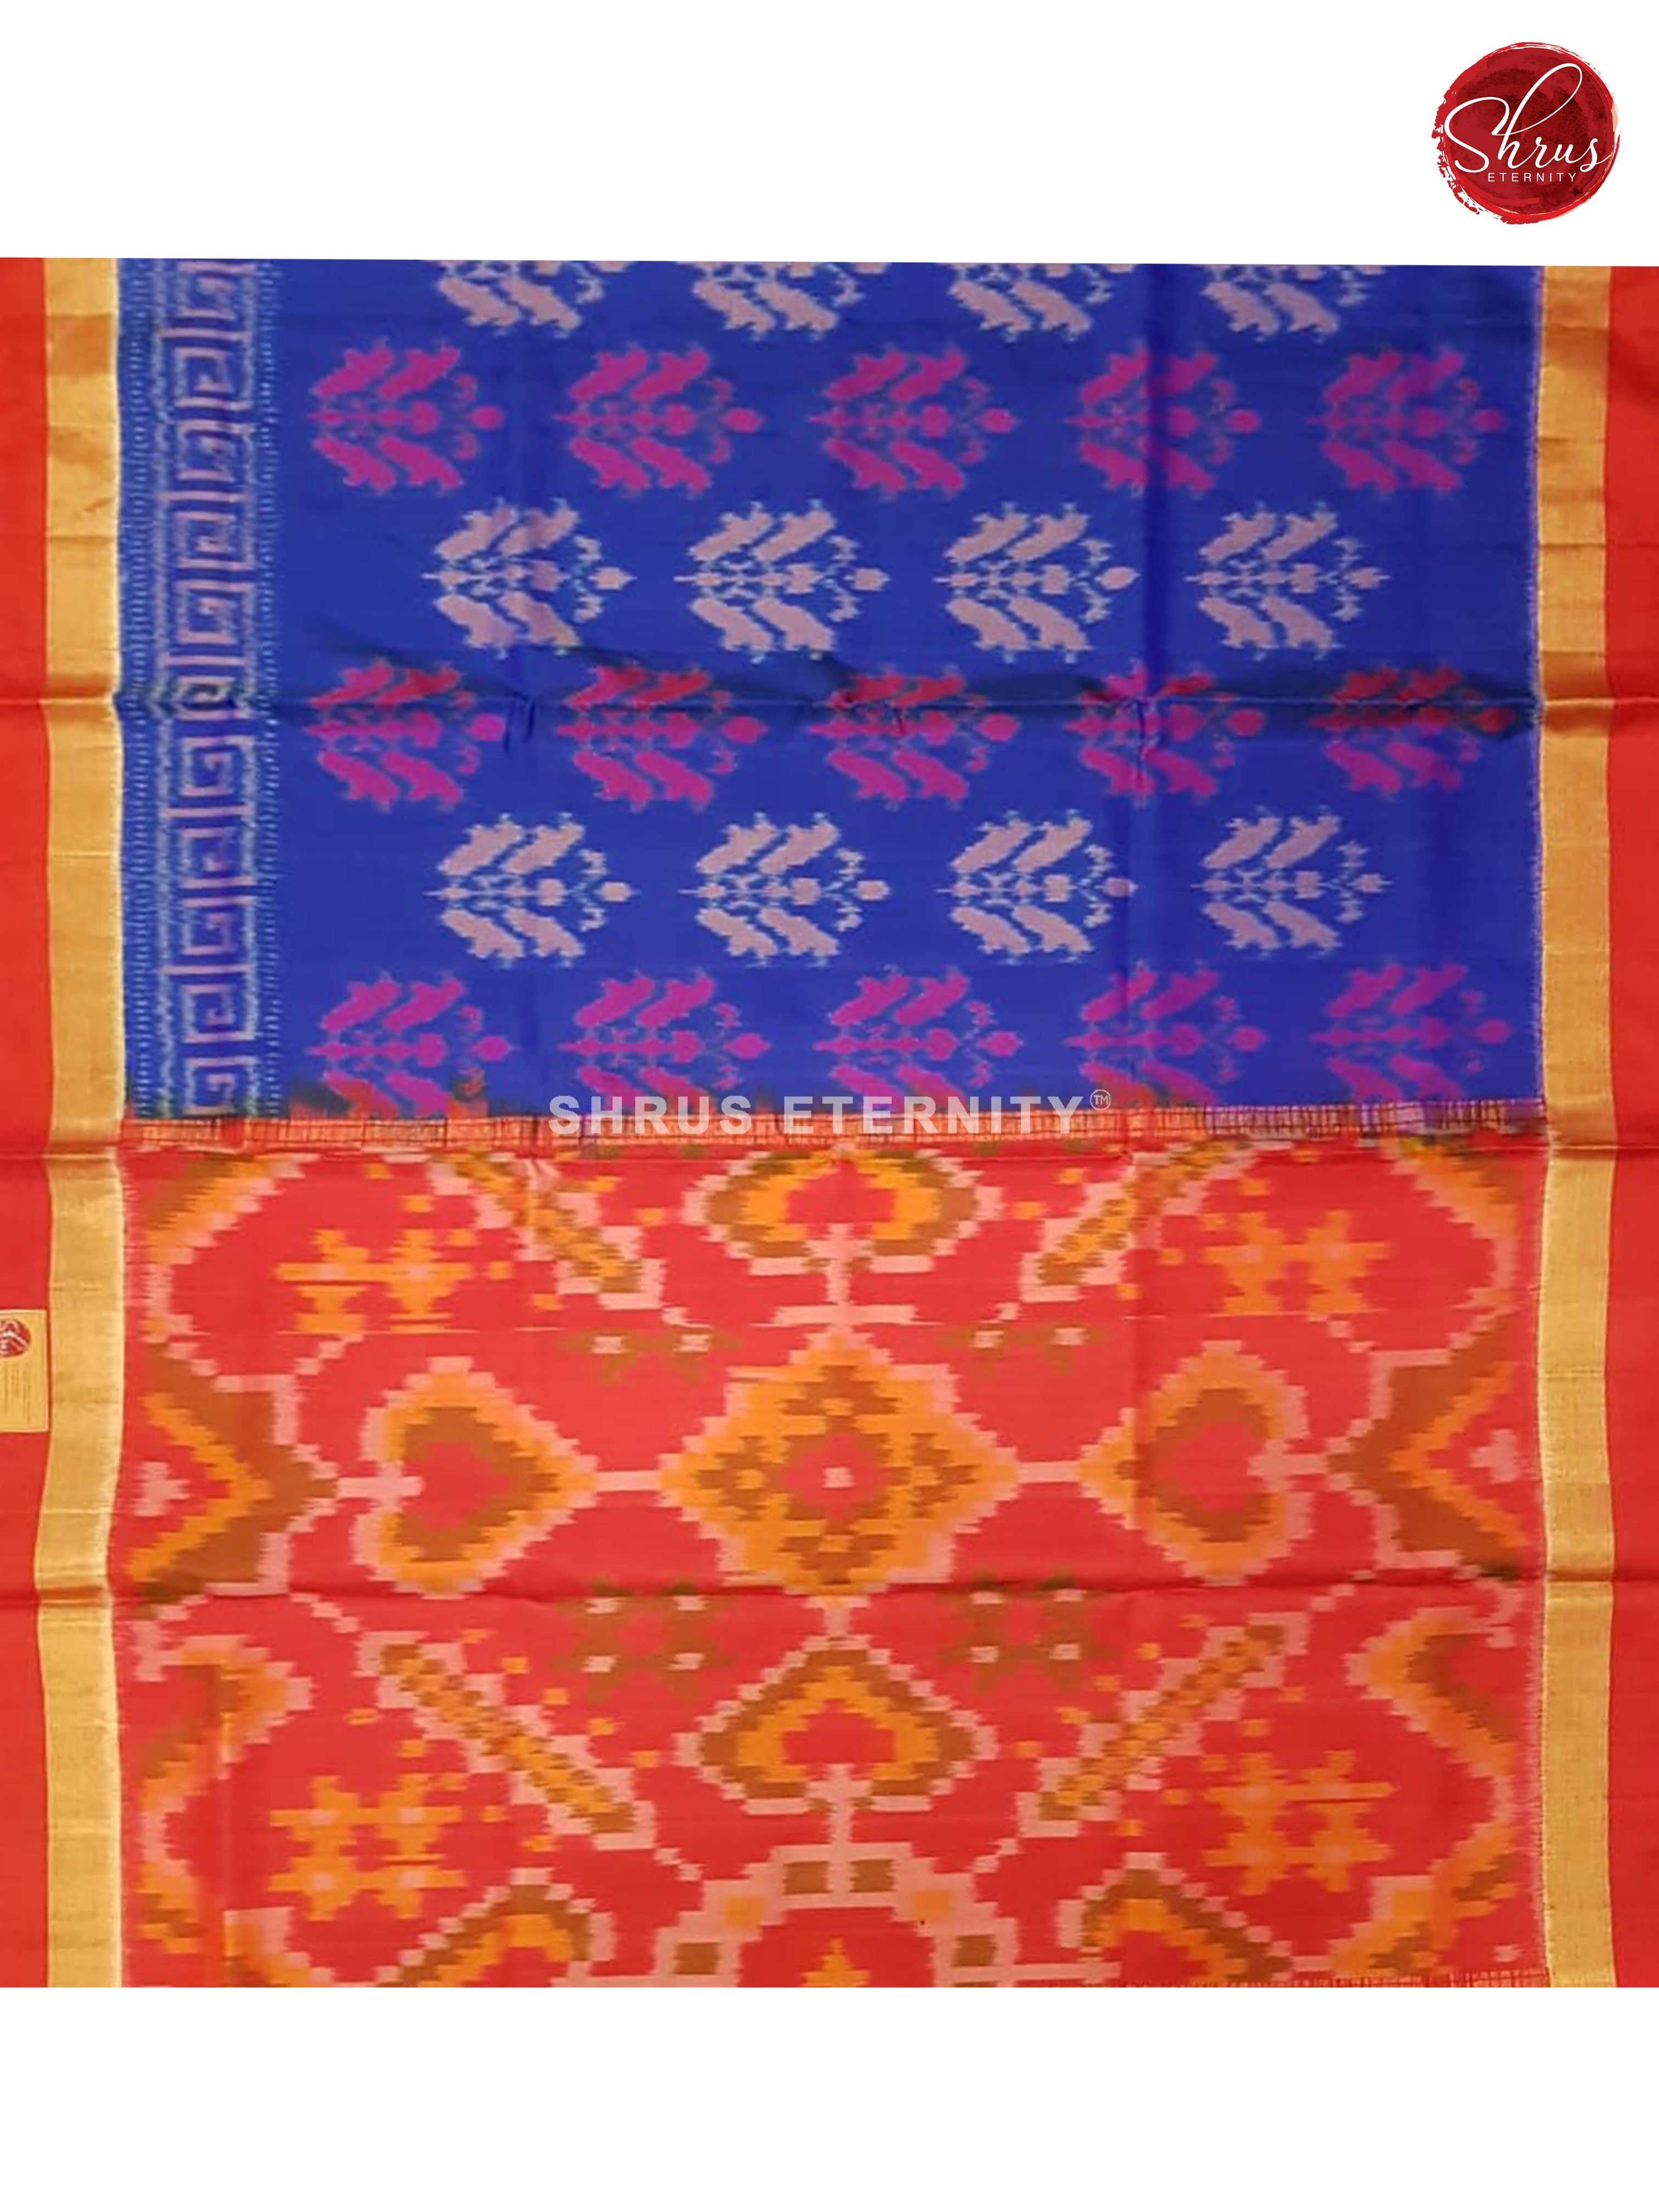 Blue & Red - Soft Silk - Shop on ShrusEternity.com